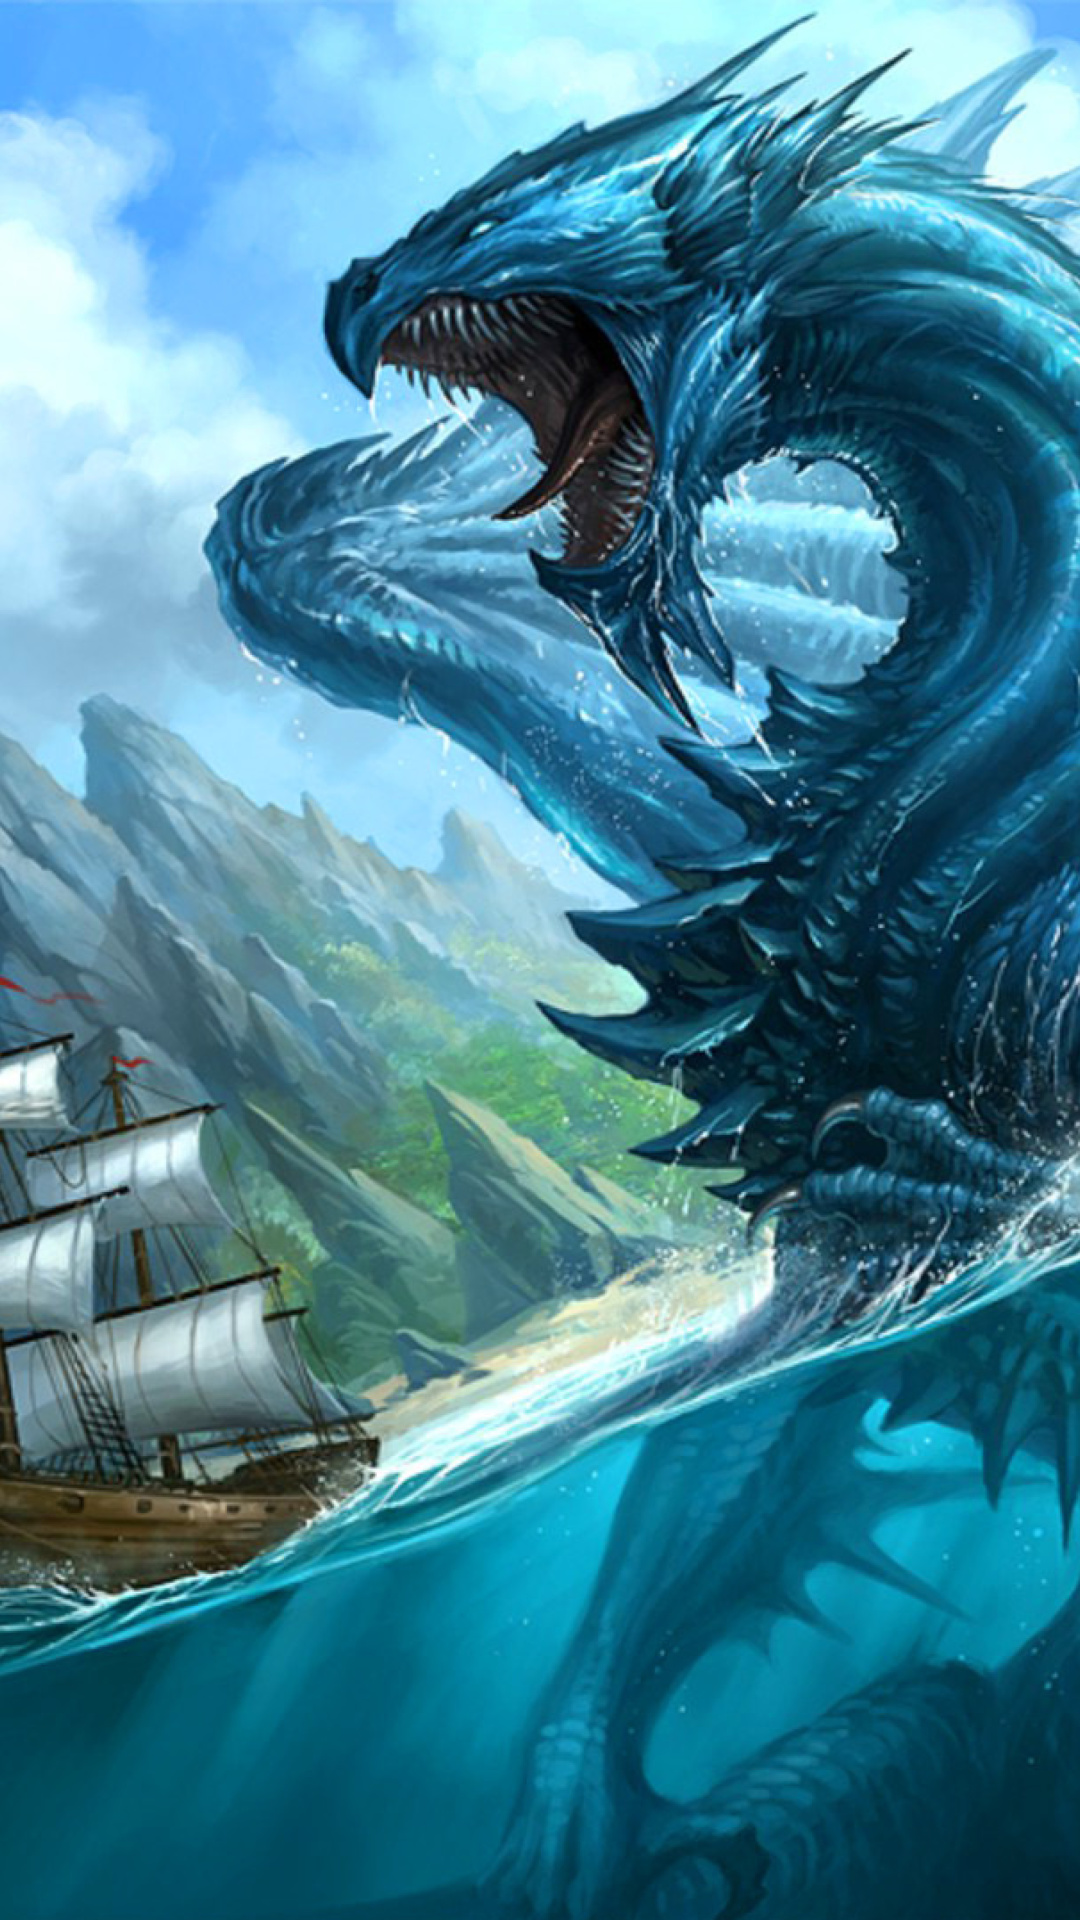 Обои Dragon attacking on ship 1080x1920